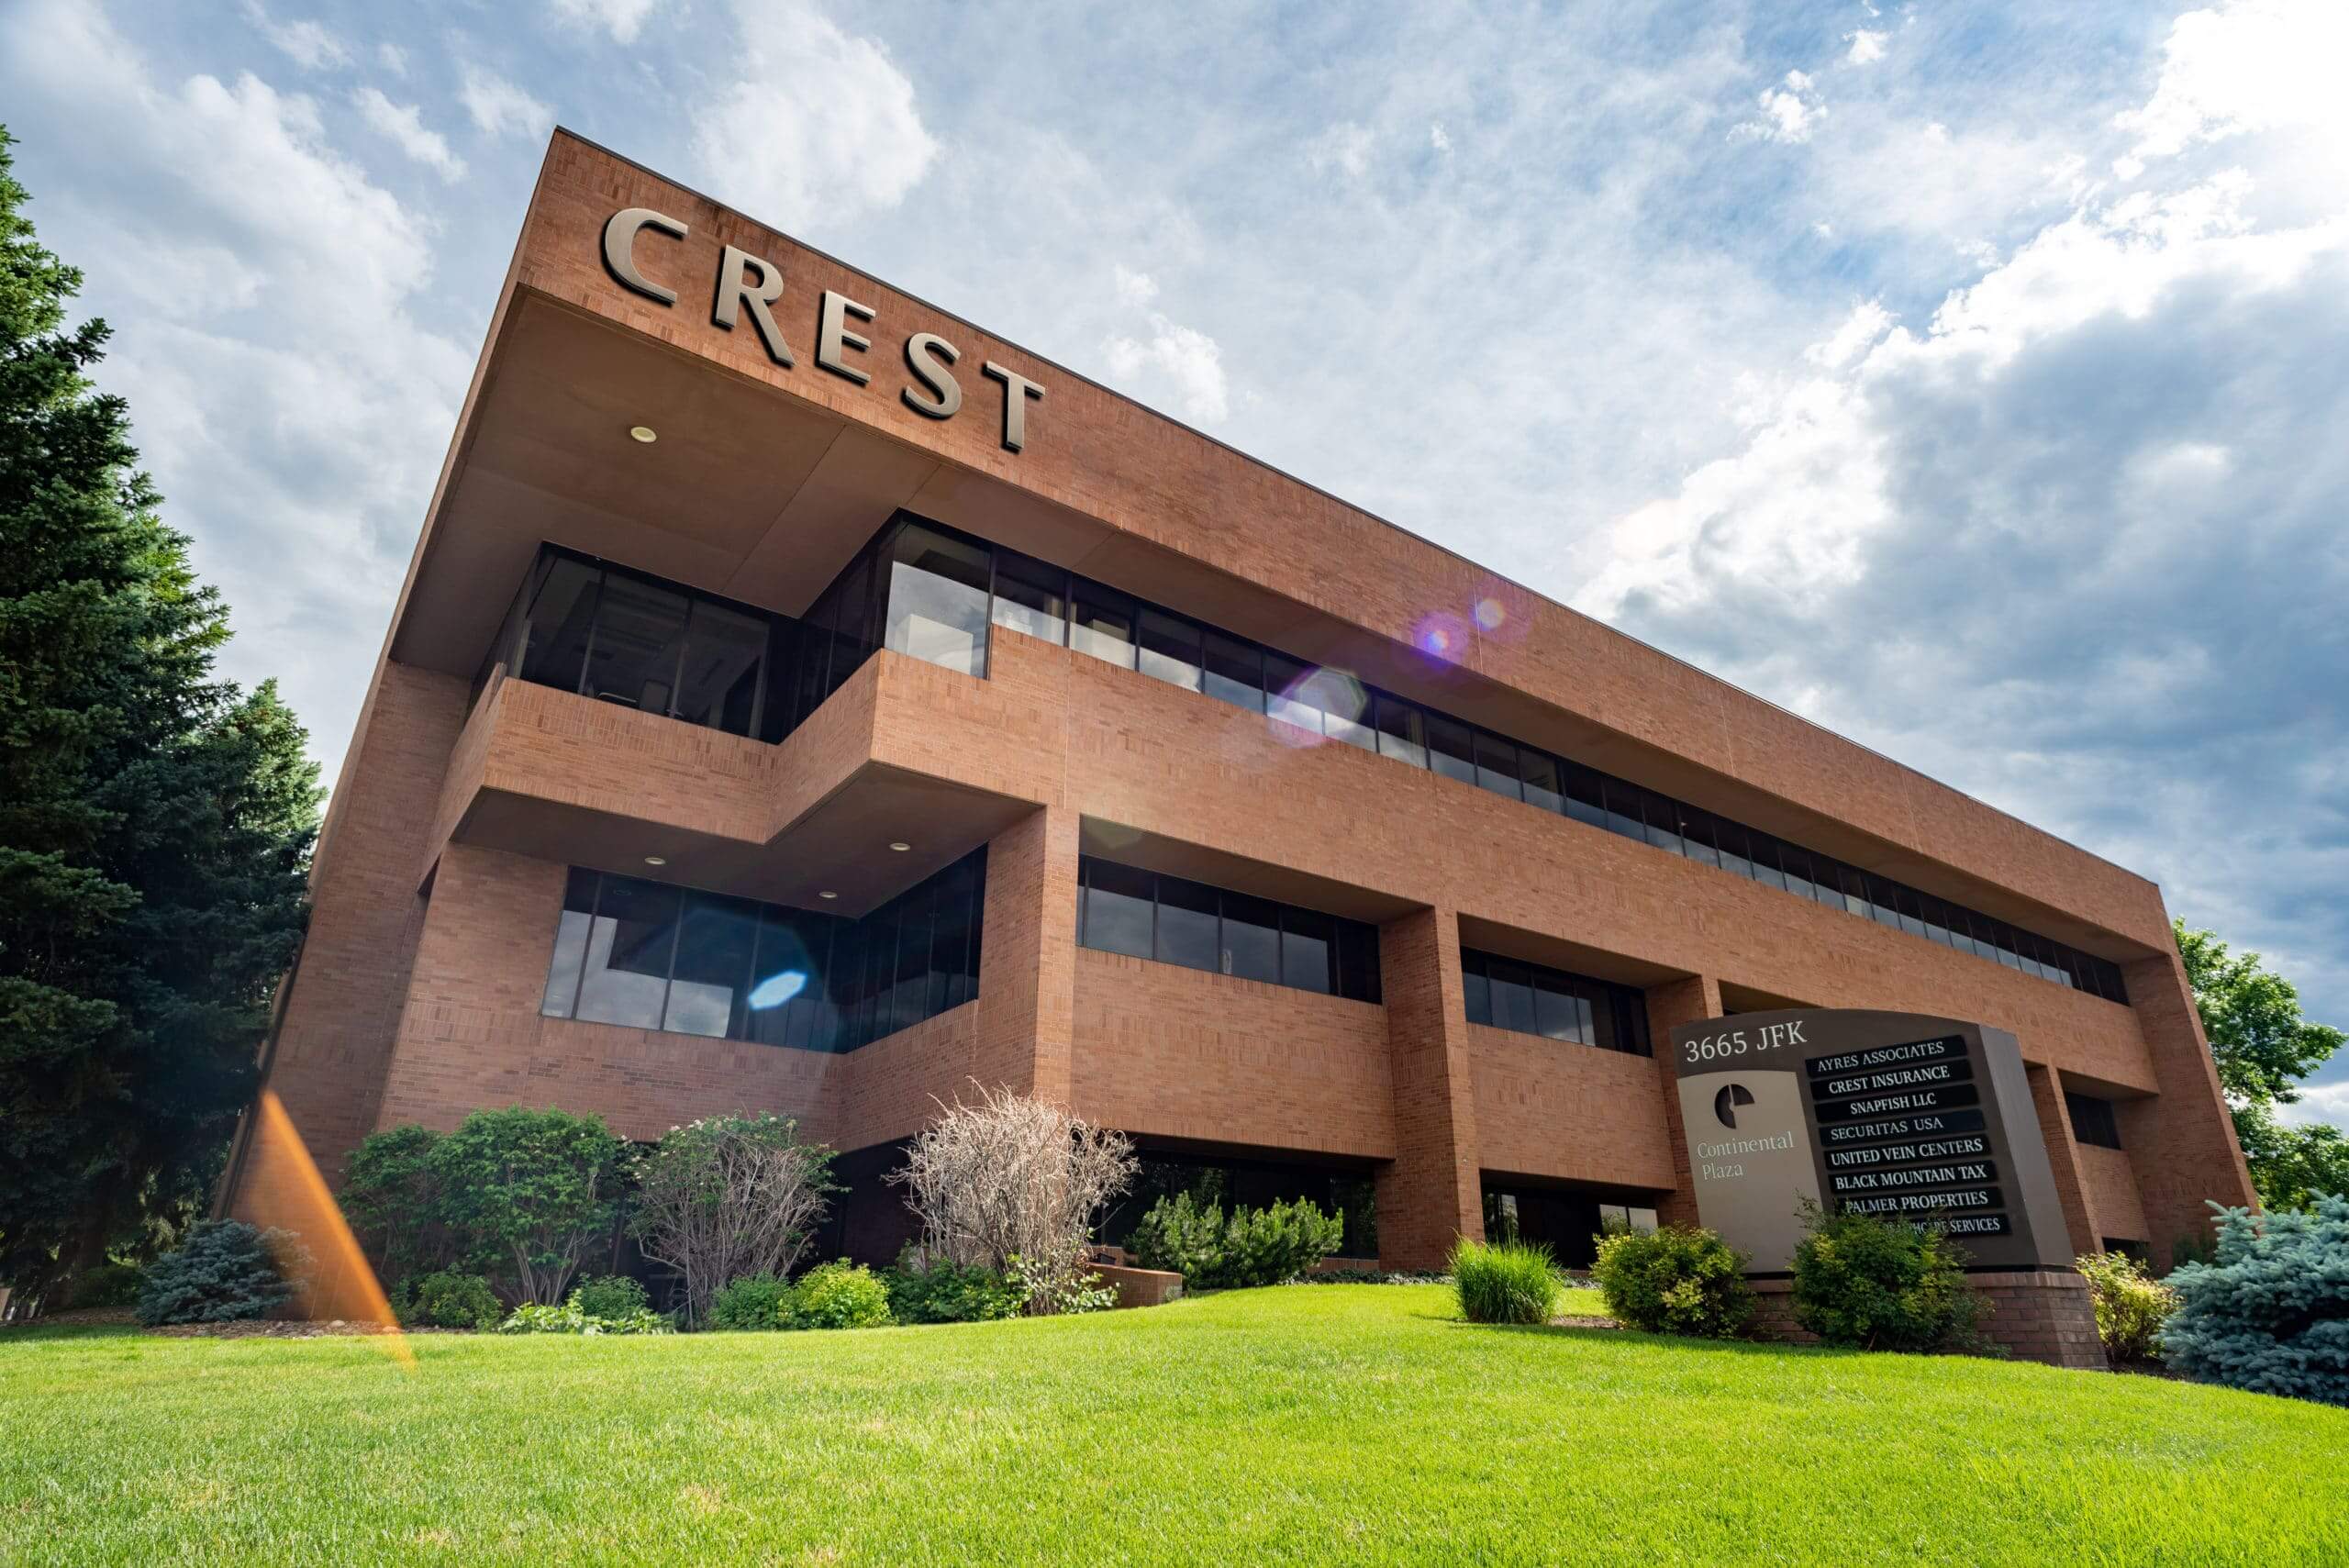 Crest Fort Collins meeting 